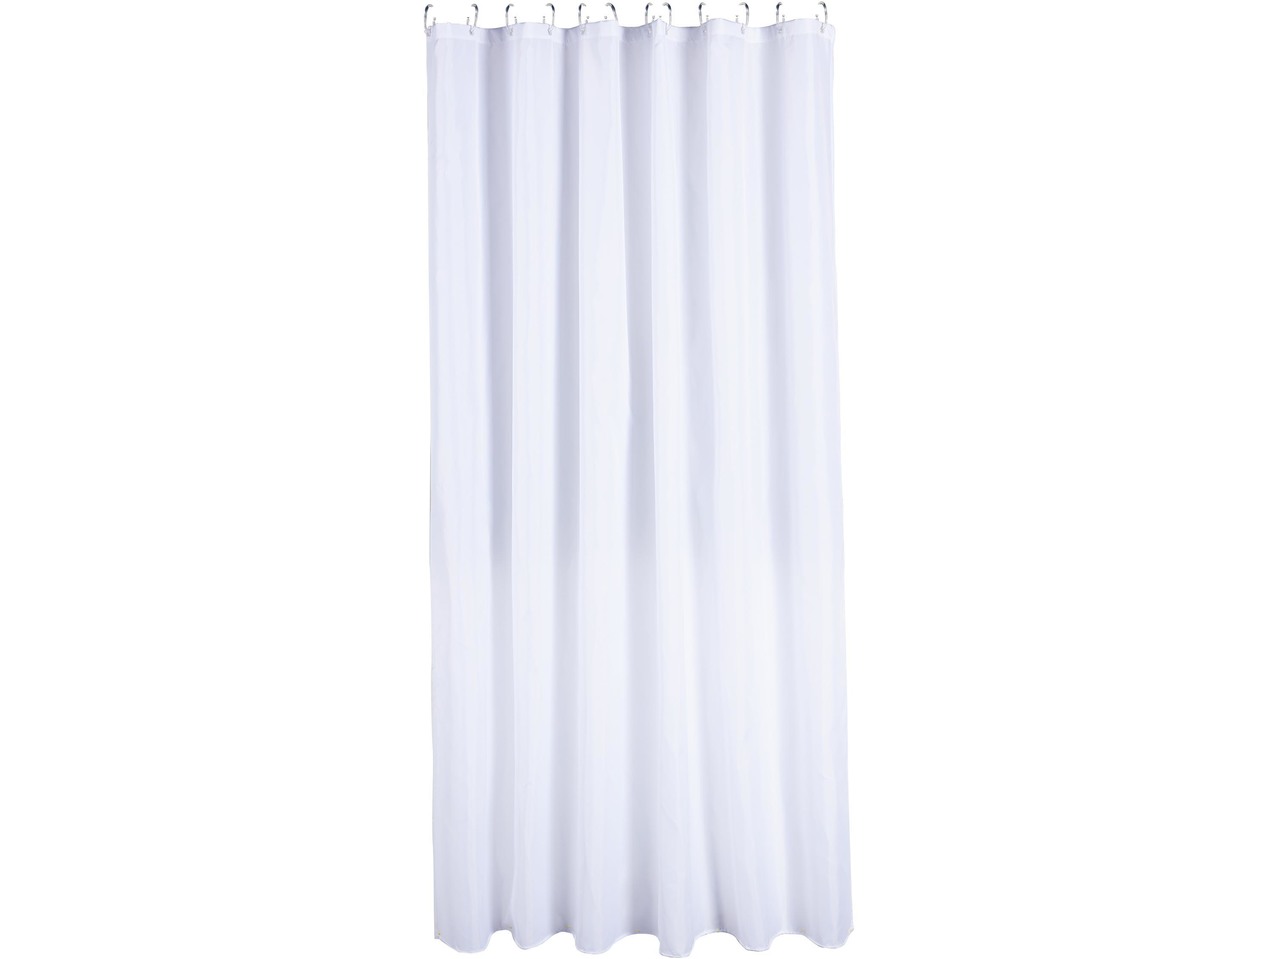 Shower Curtain 180x200cm